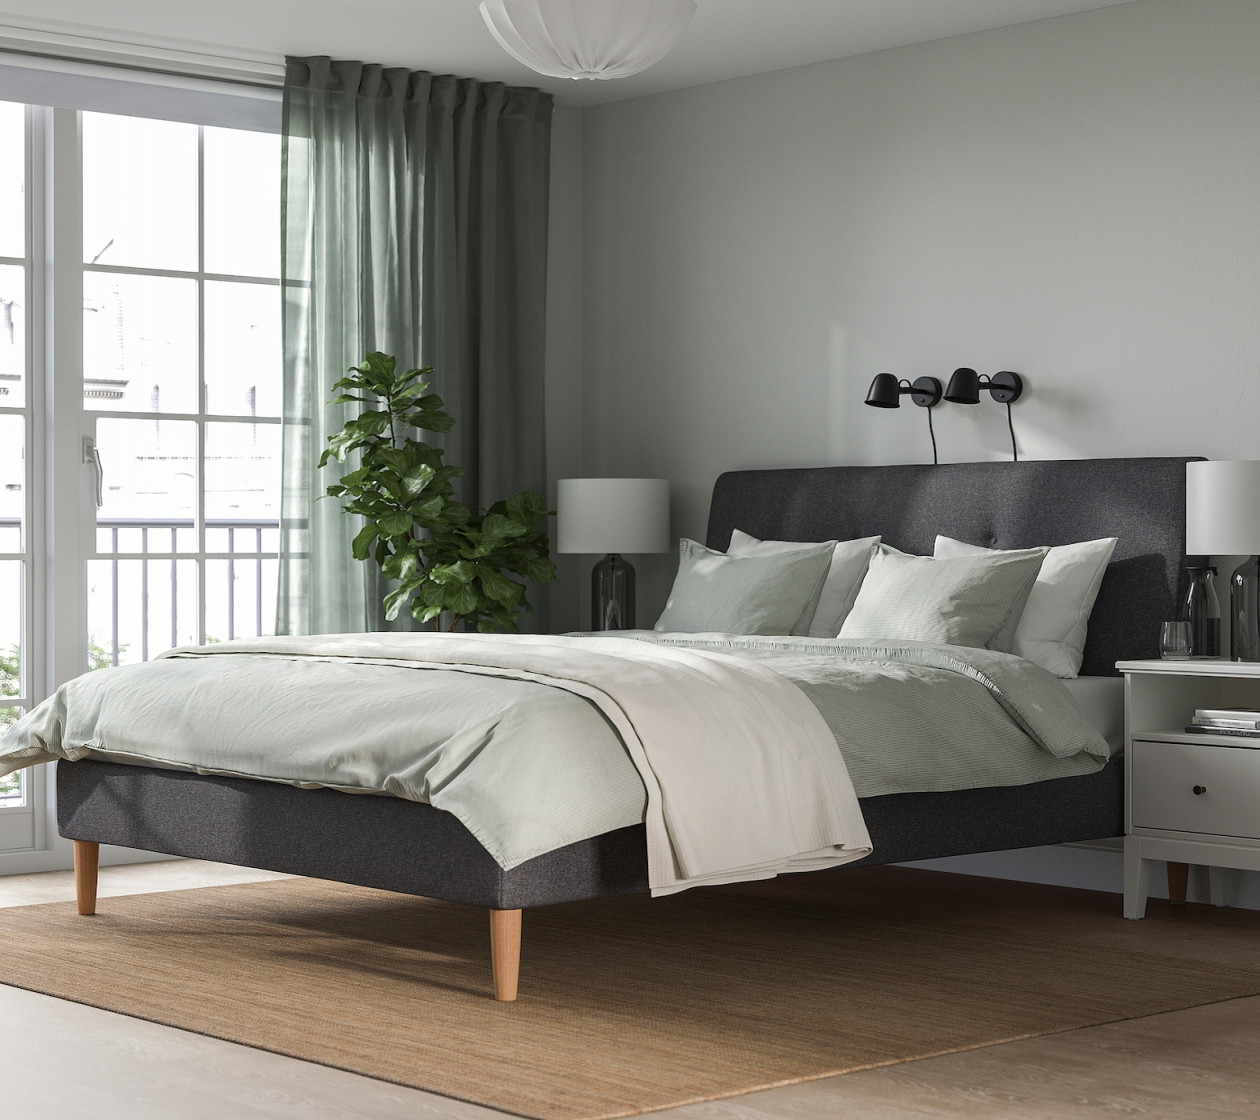 IDANÄS Upholstered bed frame, Gunnared dark grey, x cm - IKEA